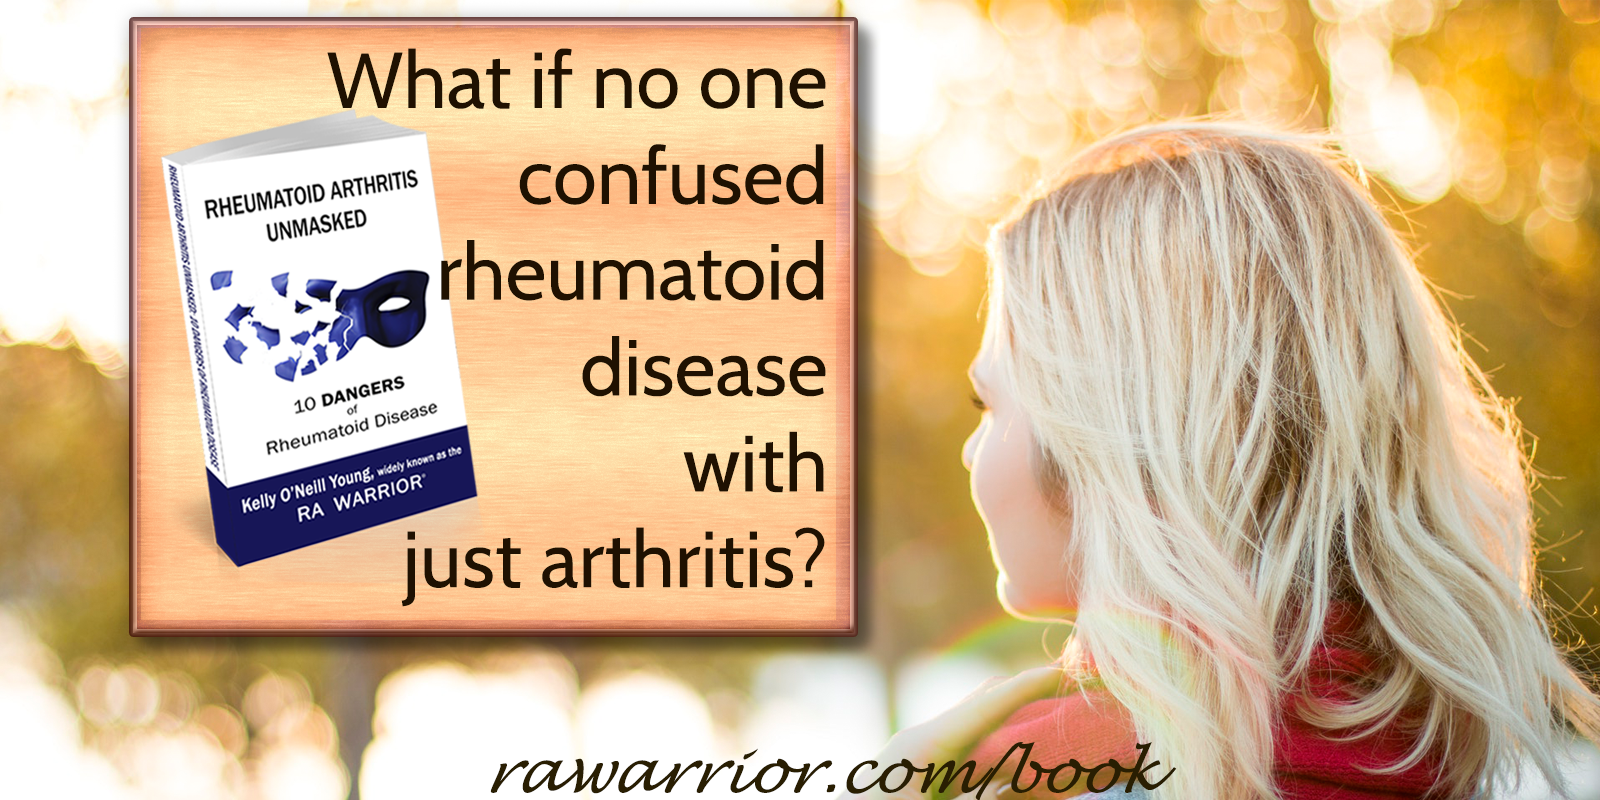 Rheumatoid Arthritis Unmasked: 10 Dangers of Rheumatoid Disease book